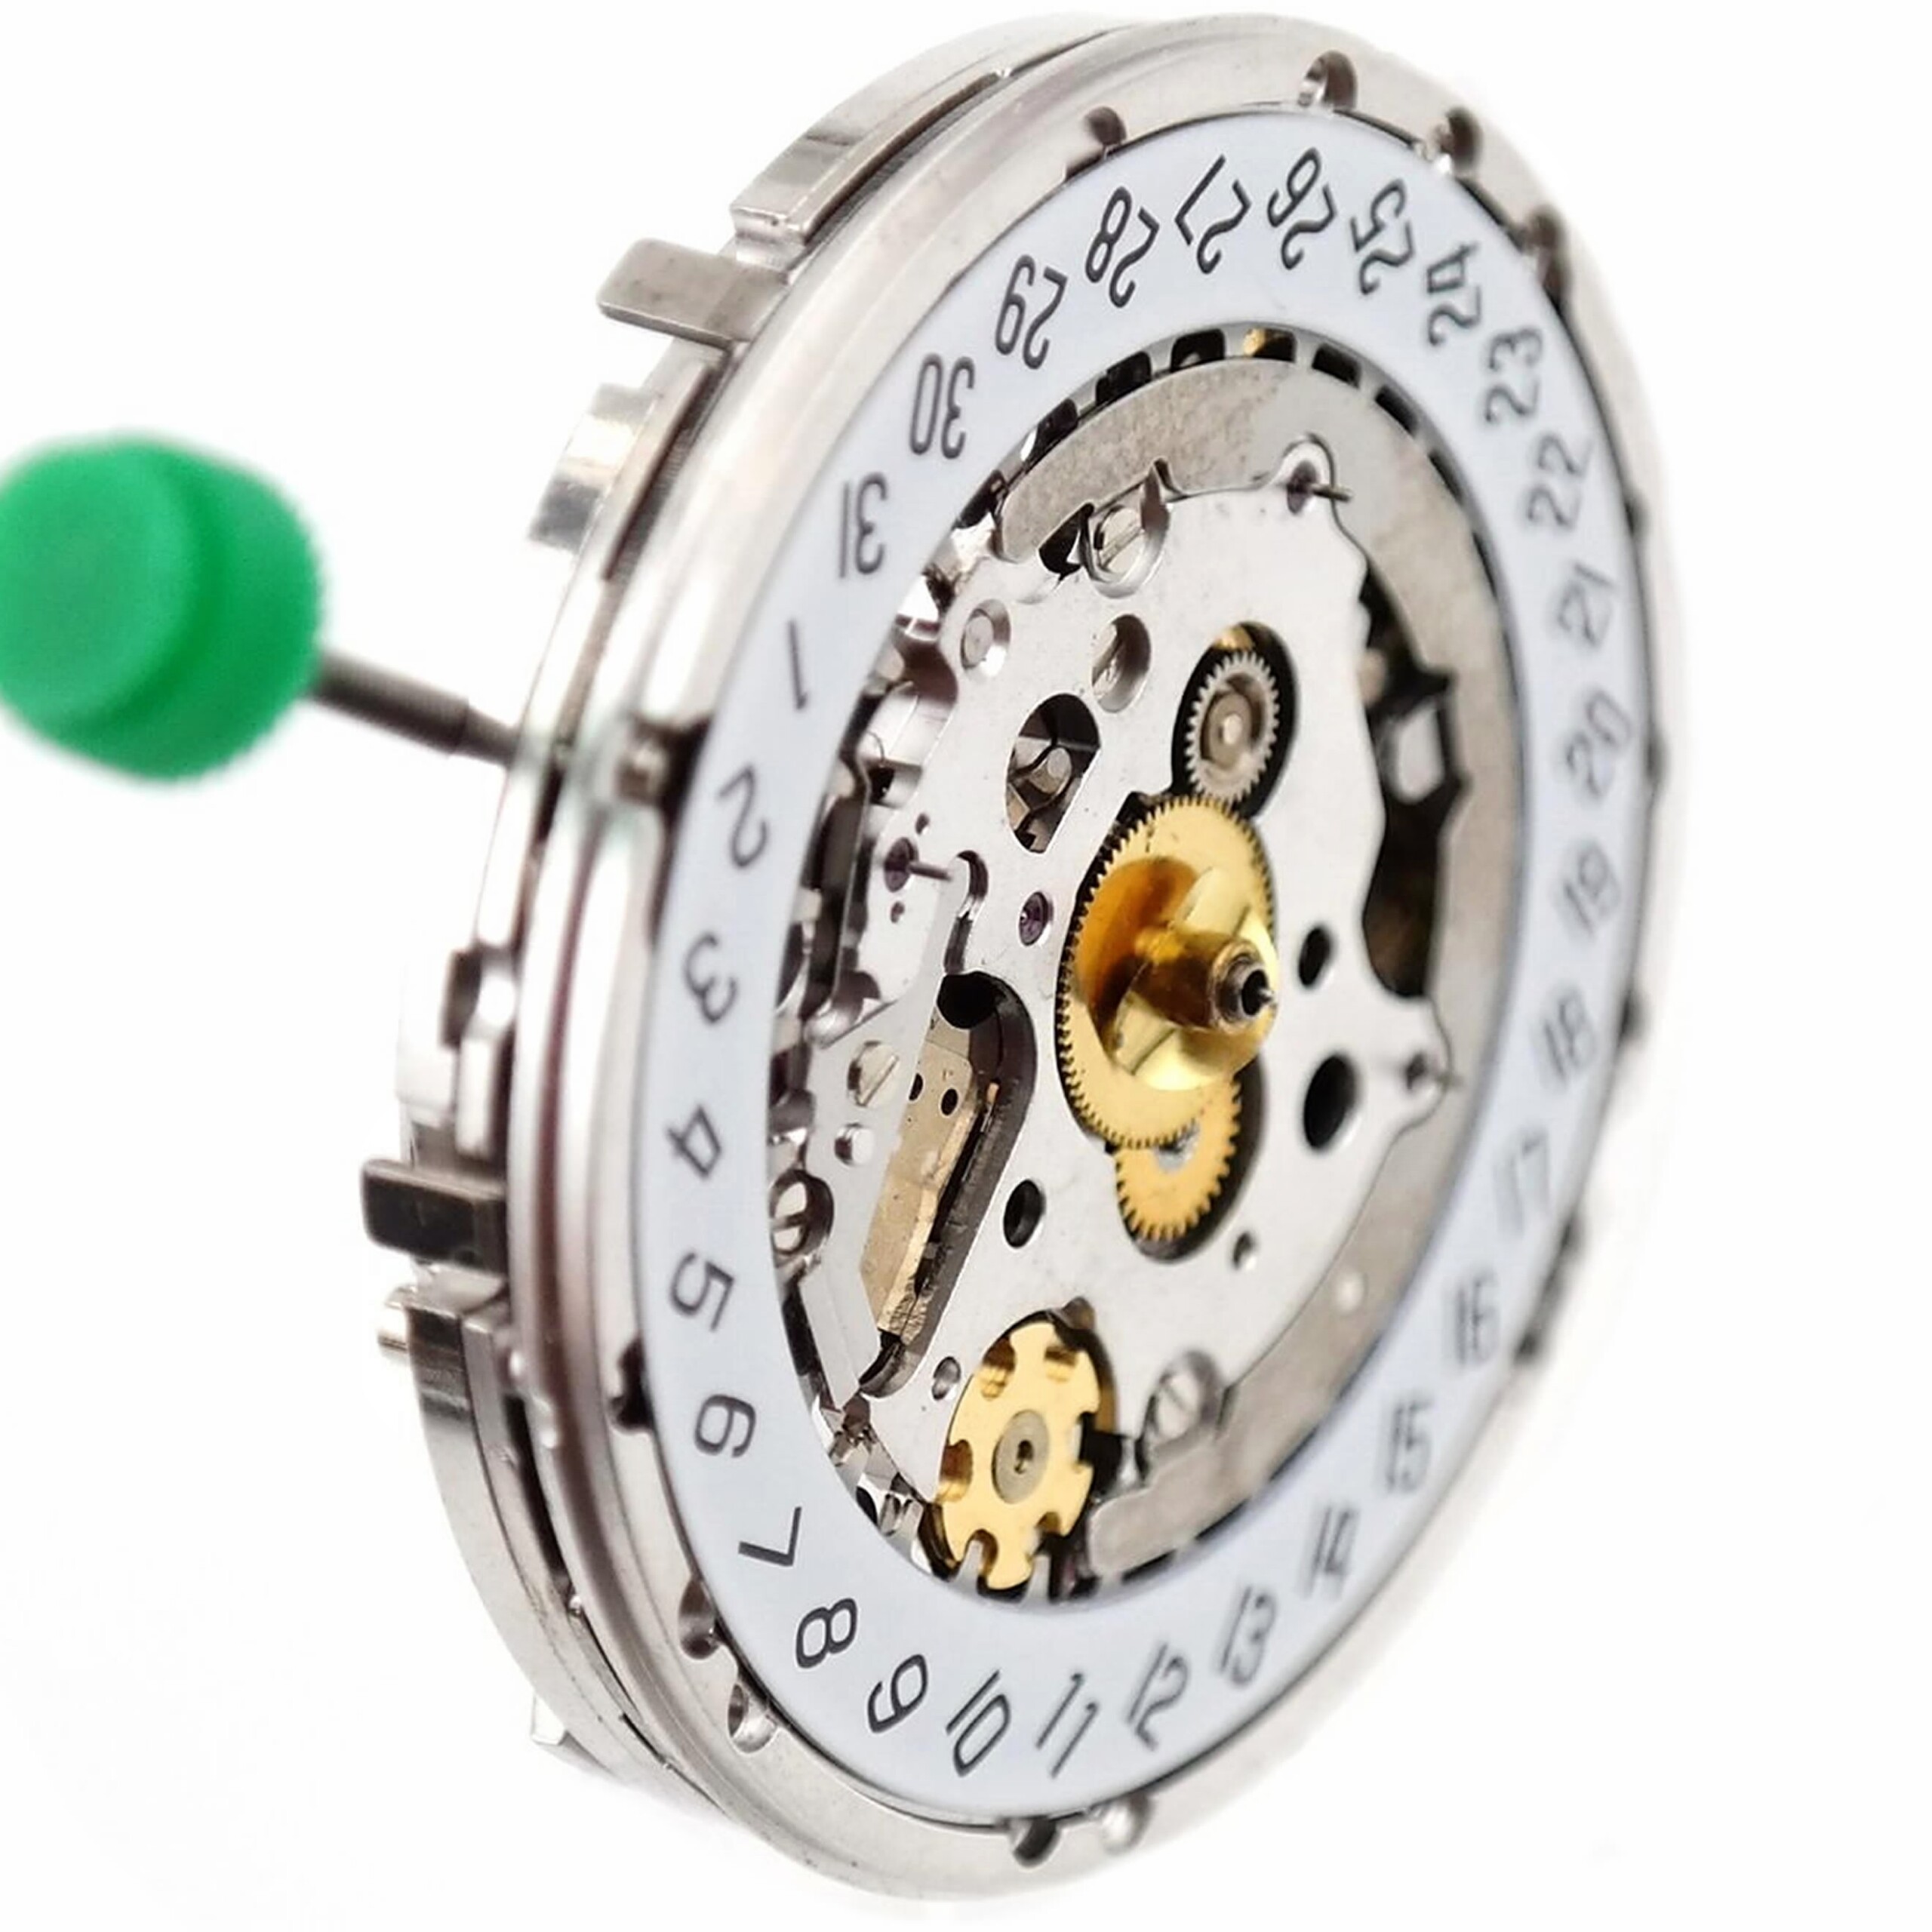 TAG Heuer Calibre 17 (ETA 2894-2) Automatic Chronograph Watch Movement